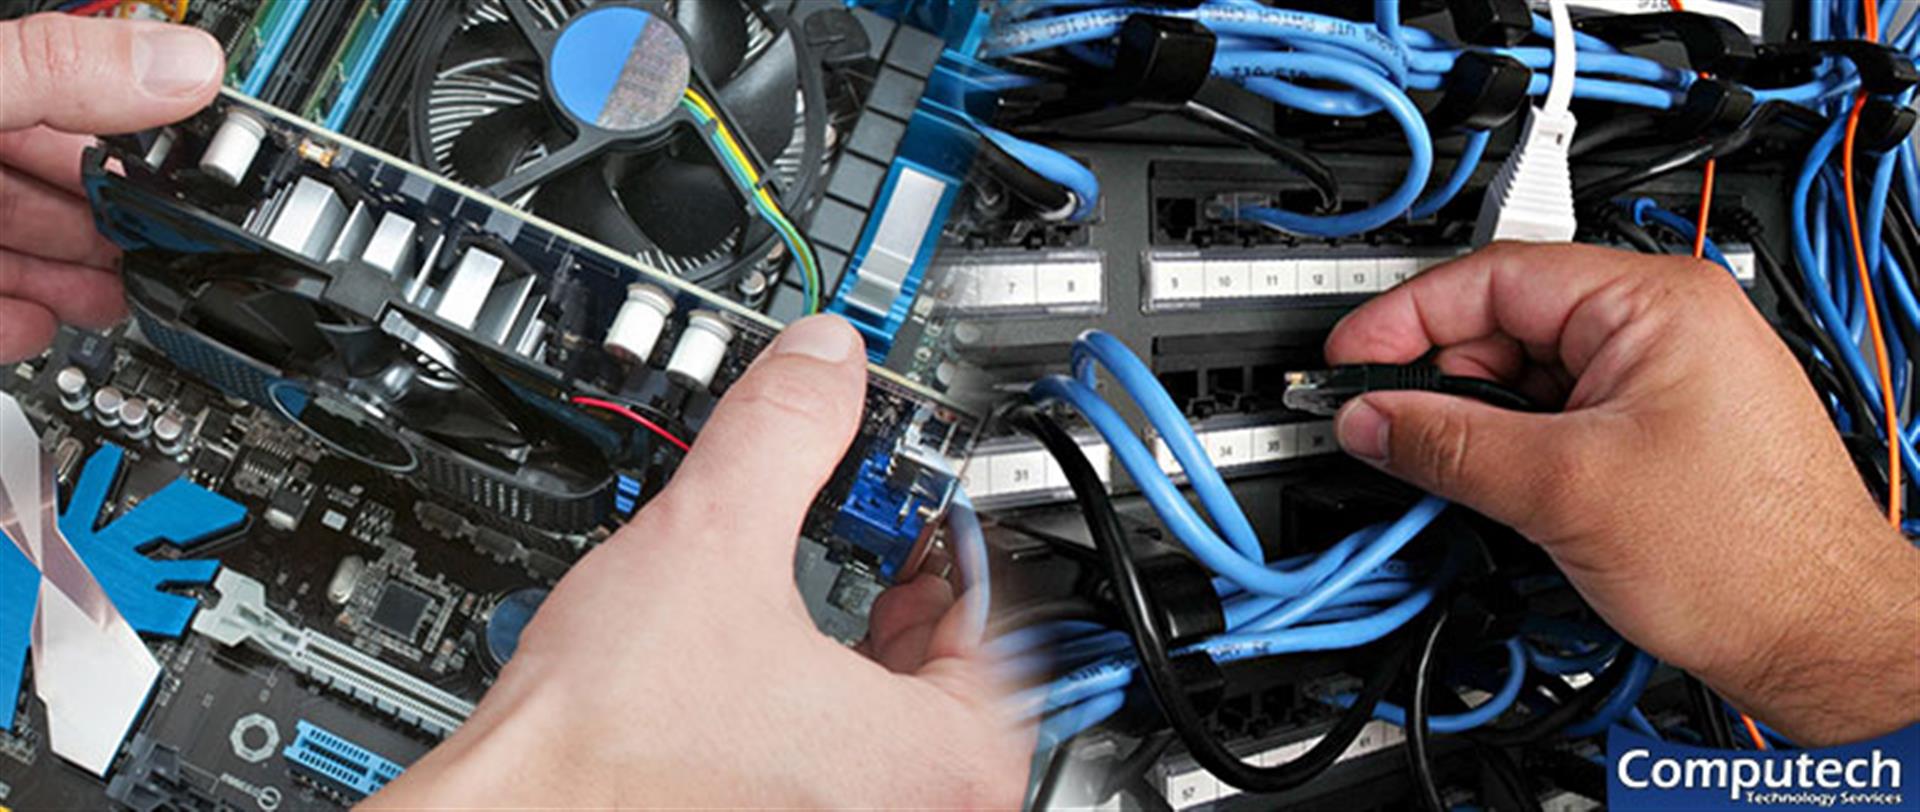 Valdosta Georgia On-Site PC & Printer Repairs, Network, Voice & Data Cabling Services